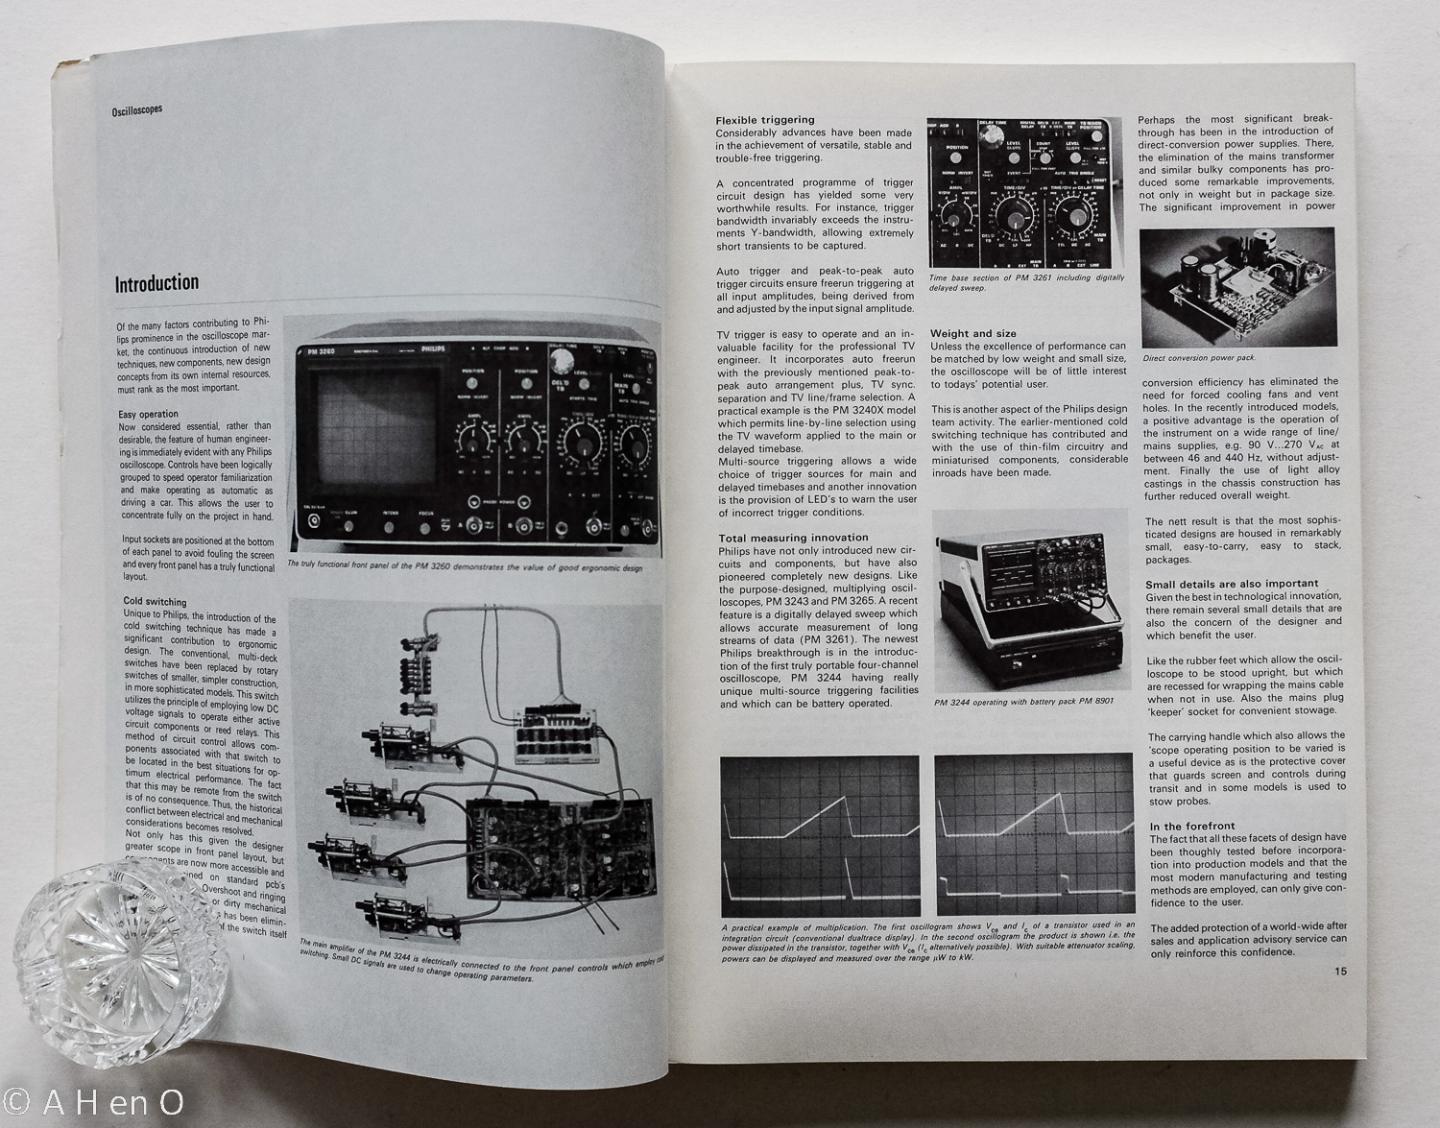 Philips Gloeilampenfabrieken Nederland n.v., Eindhoven - Test and  measuring instuments - catalog 1977